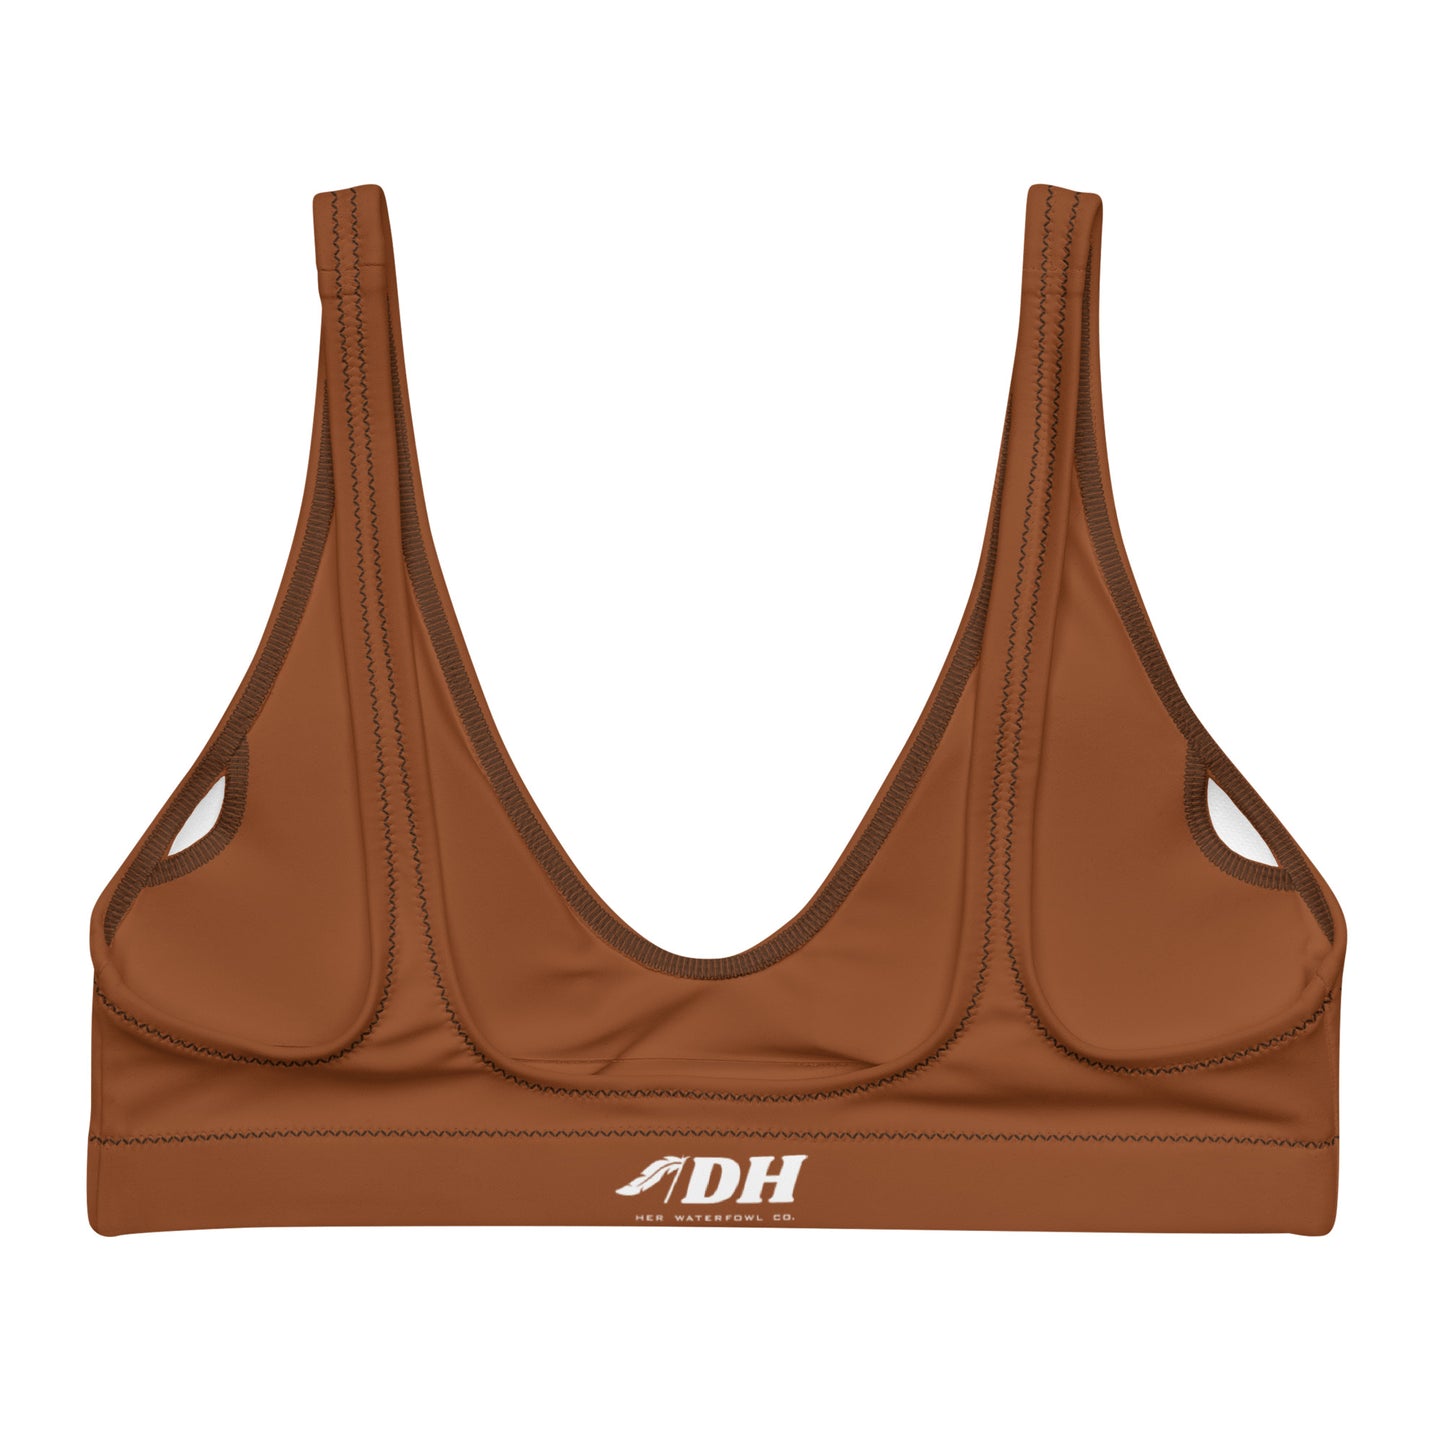 DH Lil' Debbie Prostaff Bikini Top in Rust